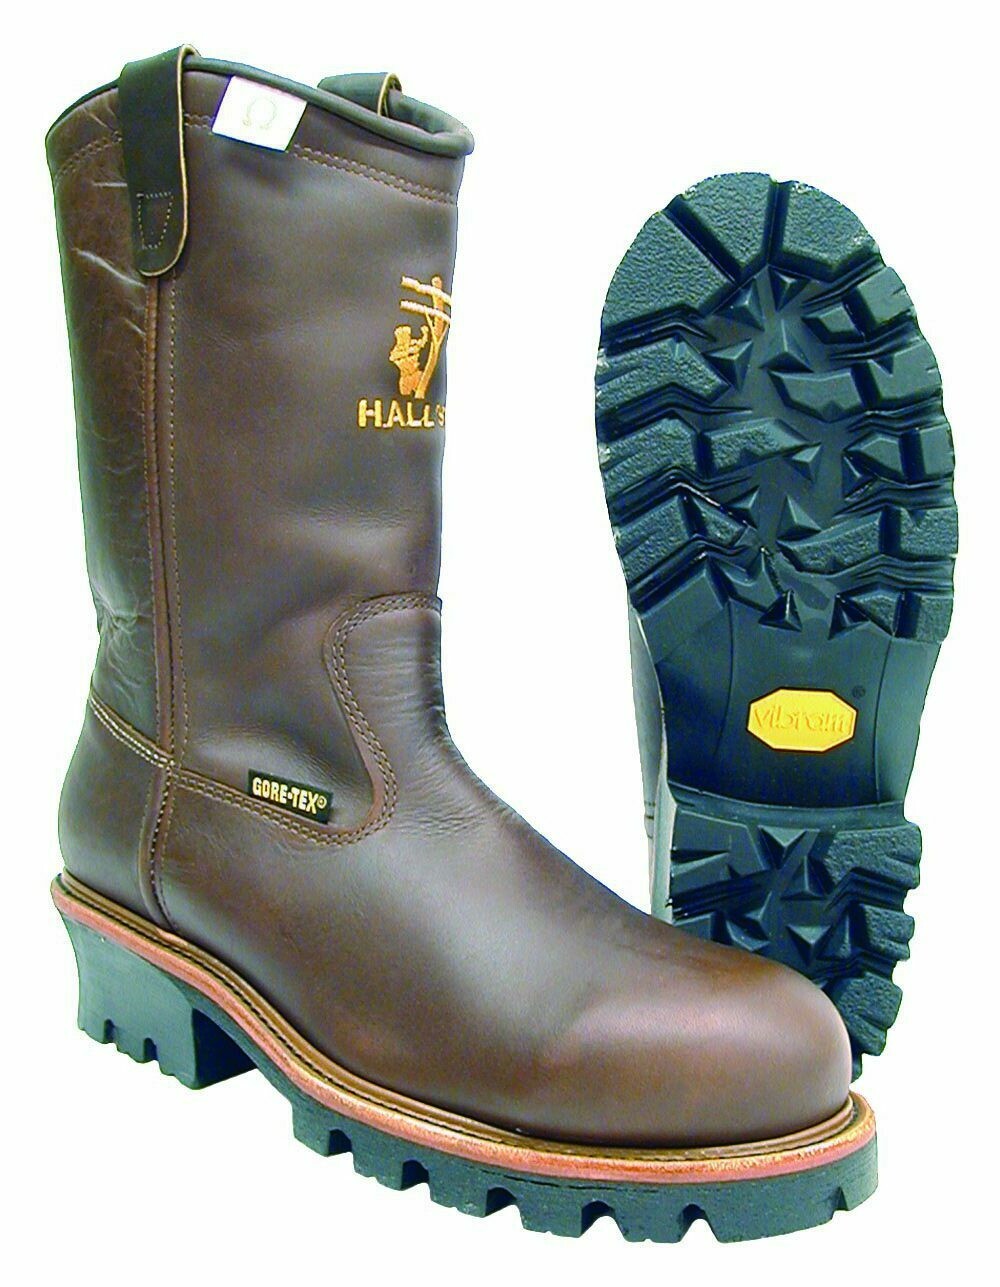 wellington safety toe boots